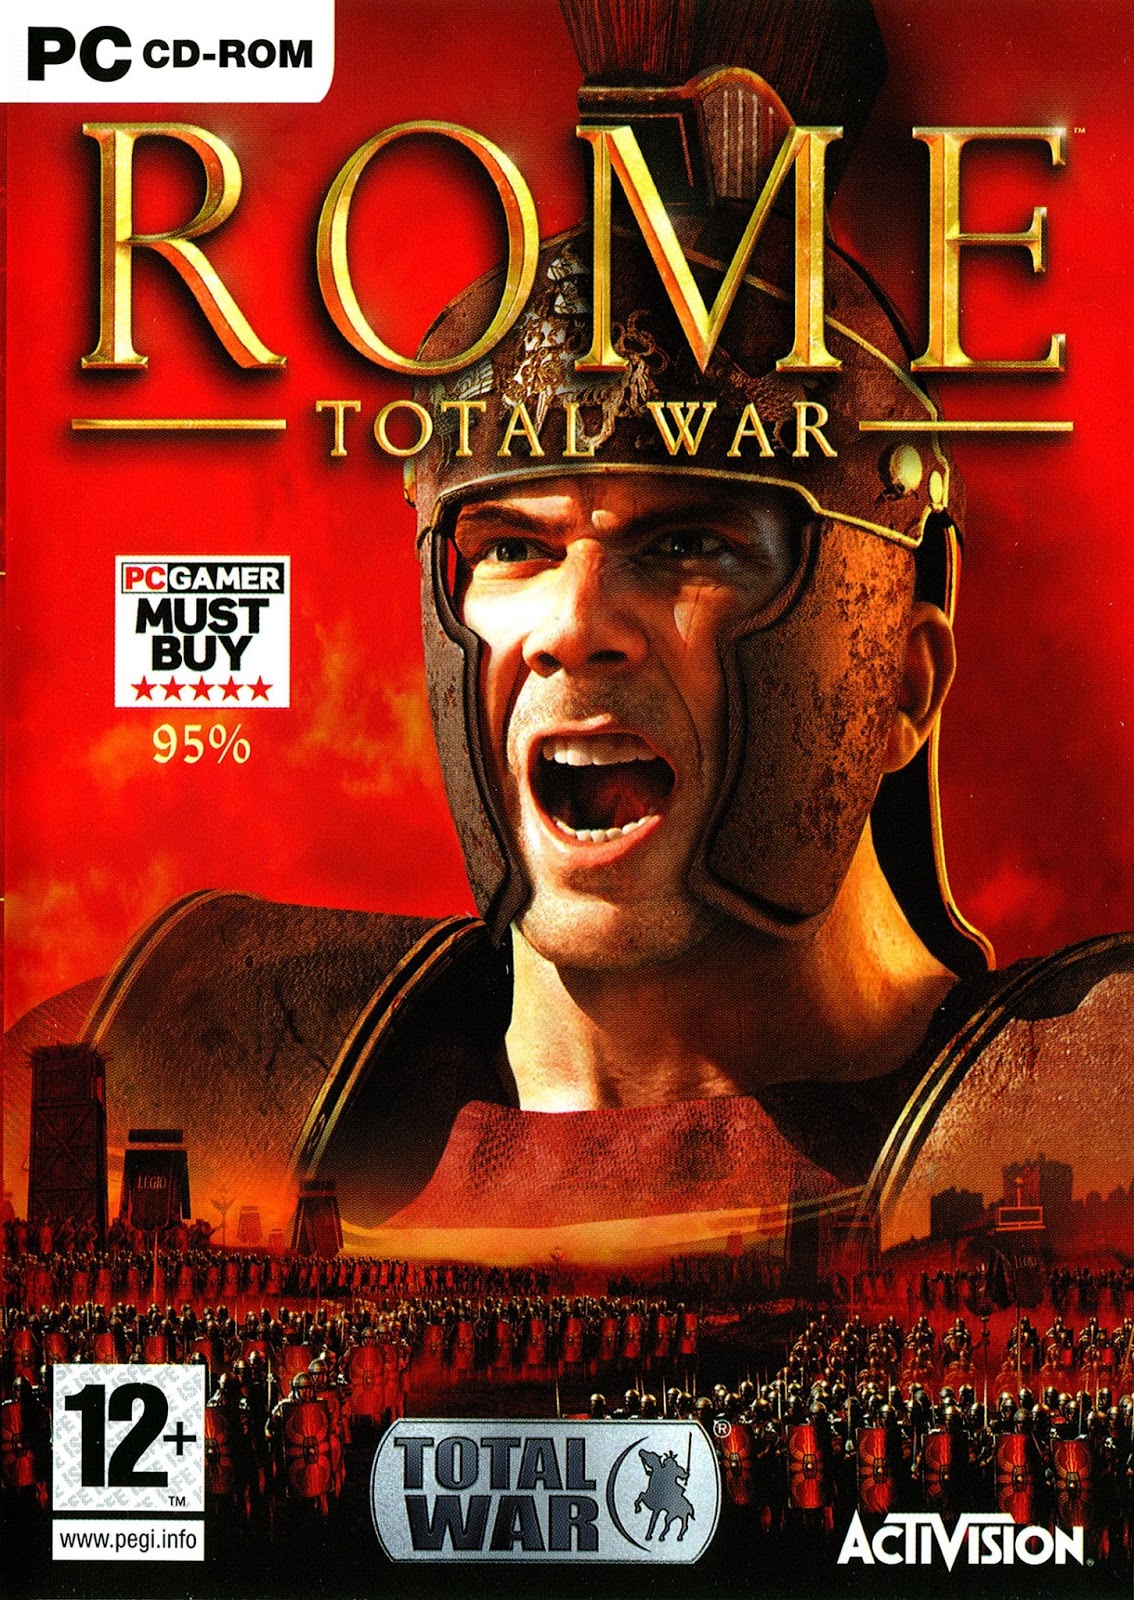 war game for pc free download full version